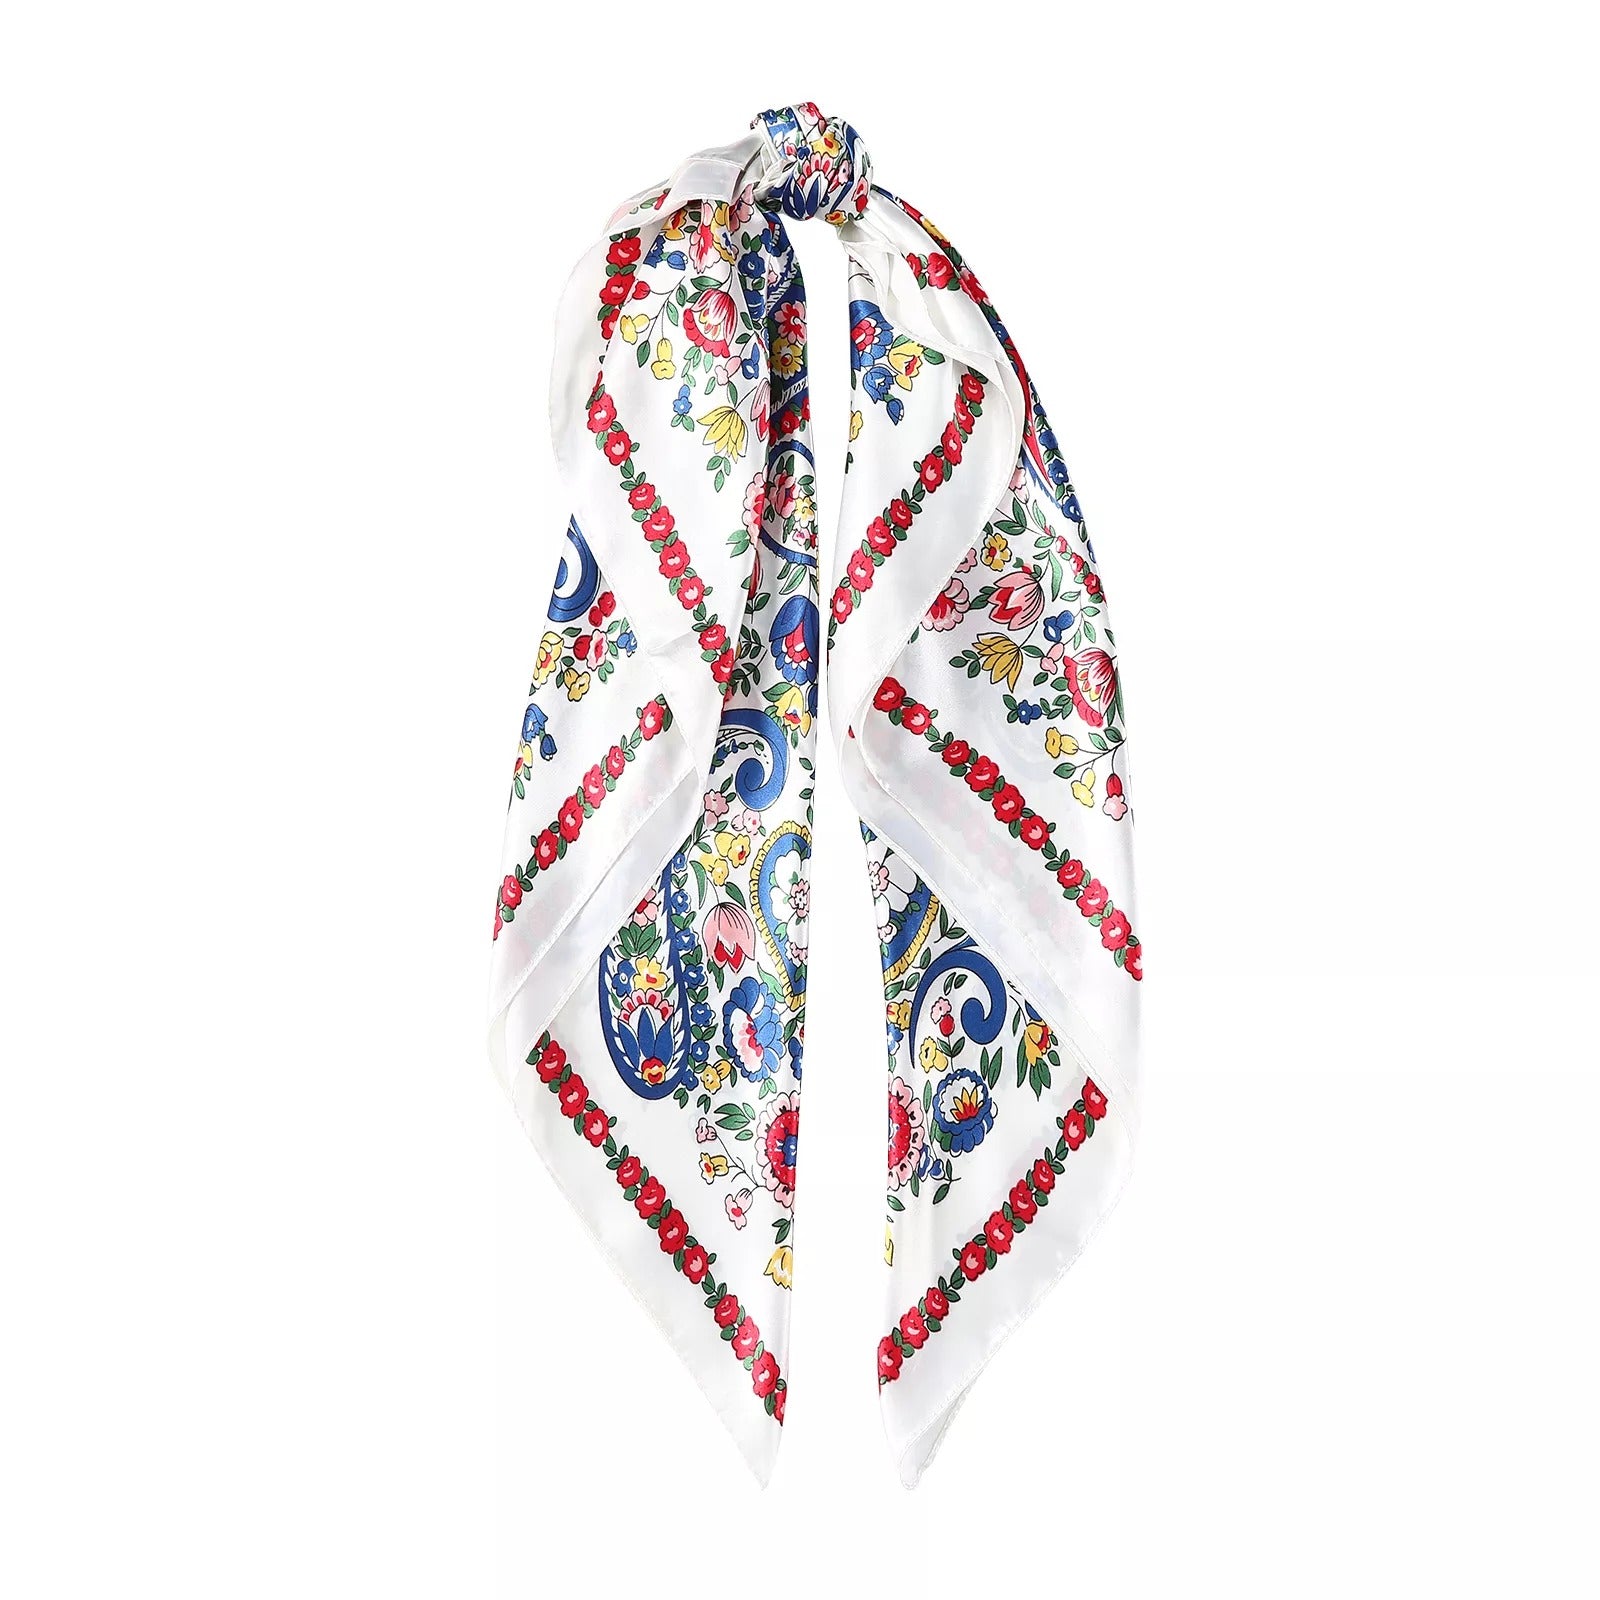 Bohemian patterned scarf